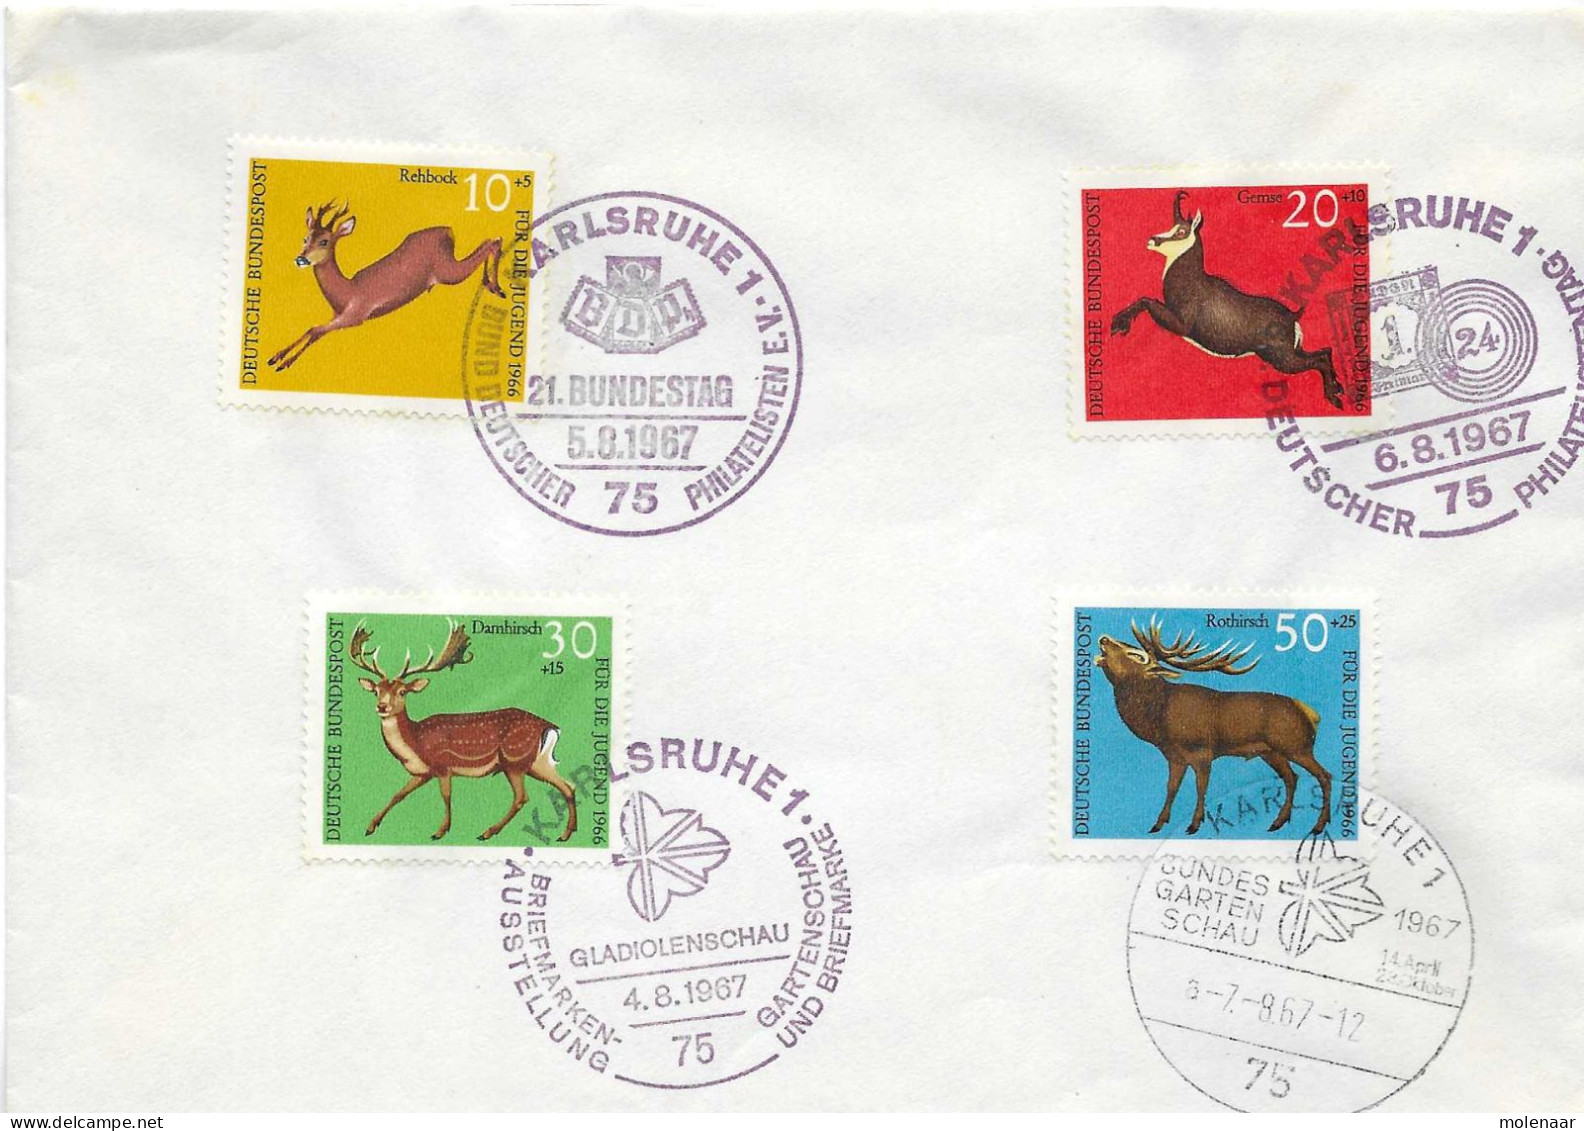 Postzegels > Europa > Duitsland > West-Duitsland > 1960-1969 > Brief Met 511-514 4 Verschillende Stempels (17300) - Brieven En Documenten